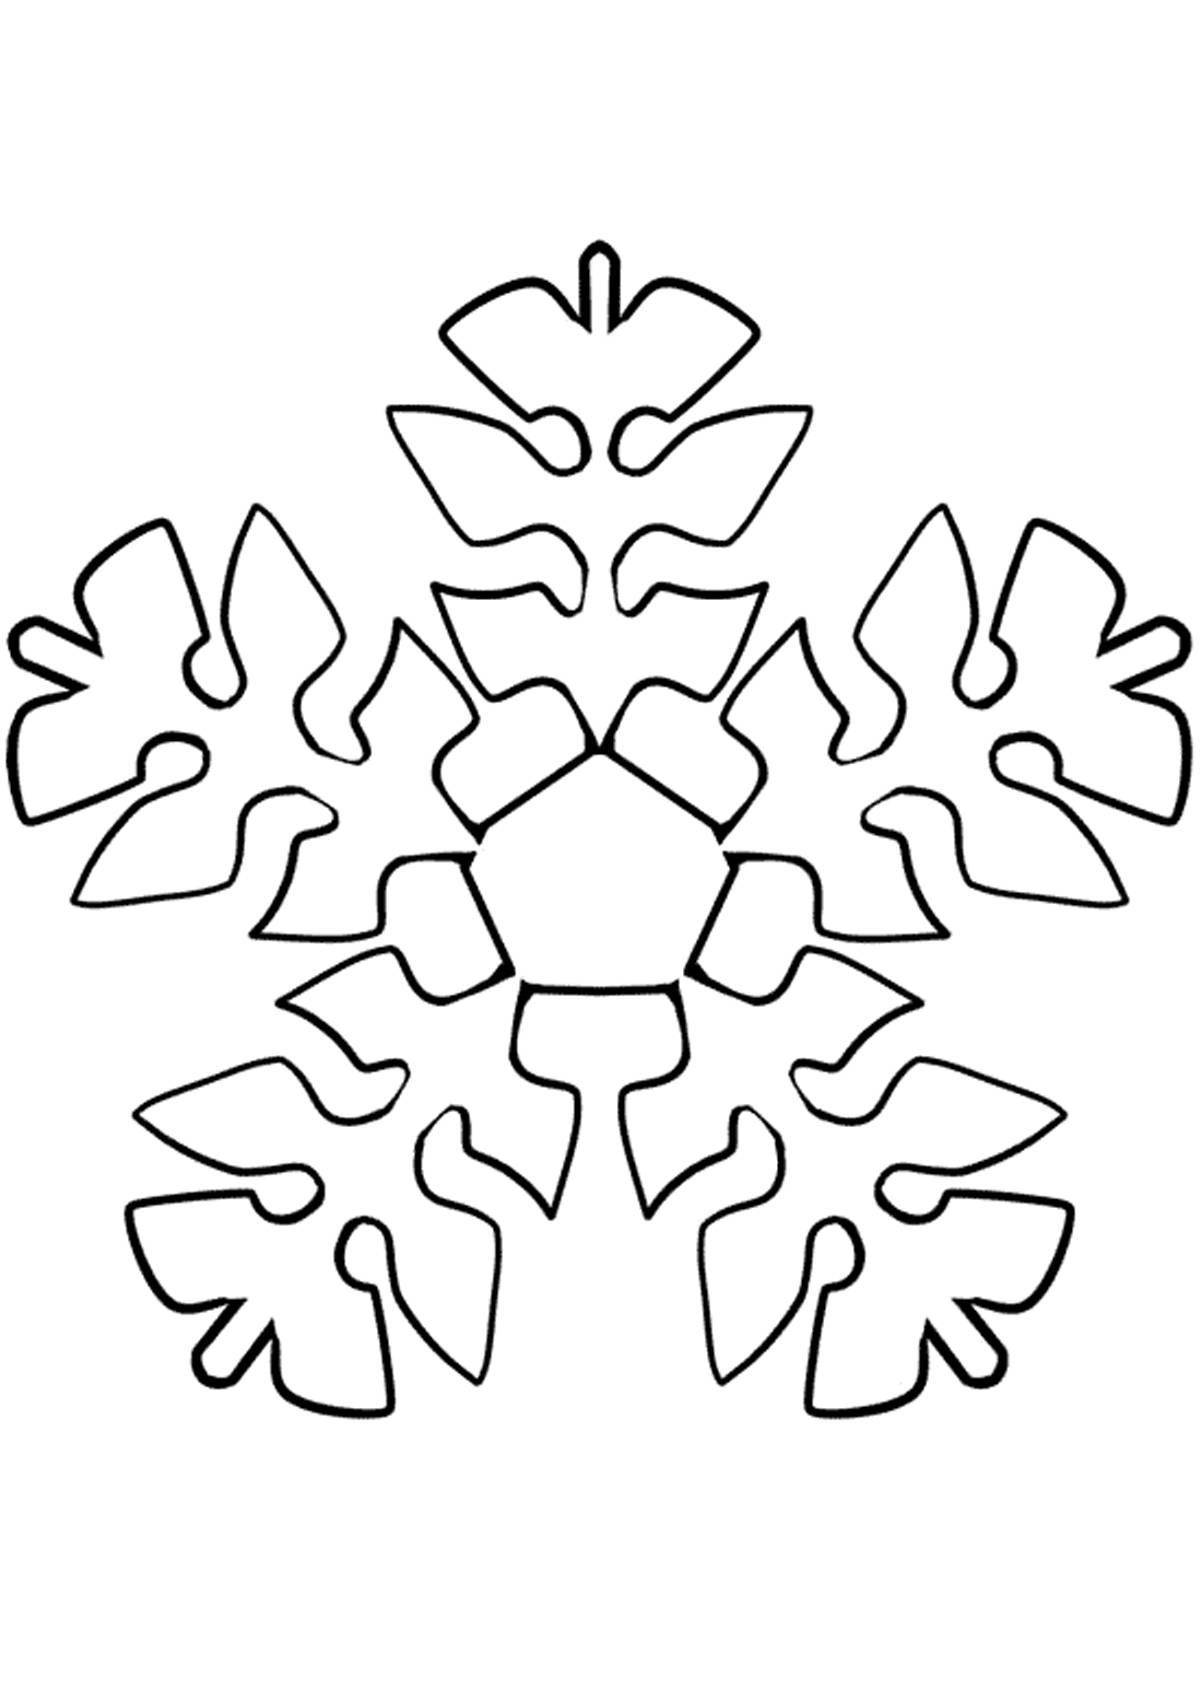 Luxury snowflake coloring book